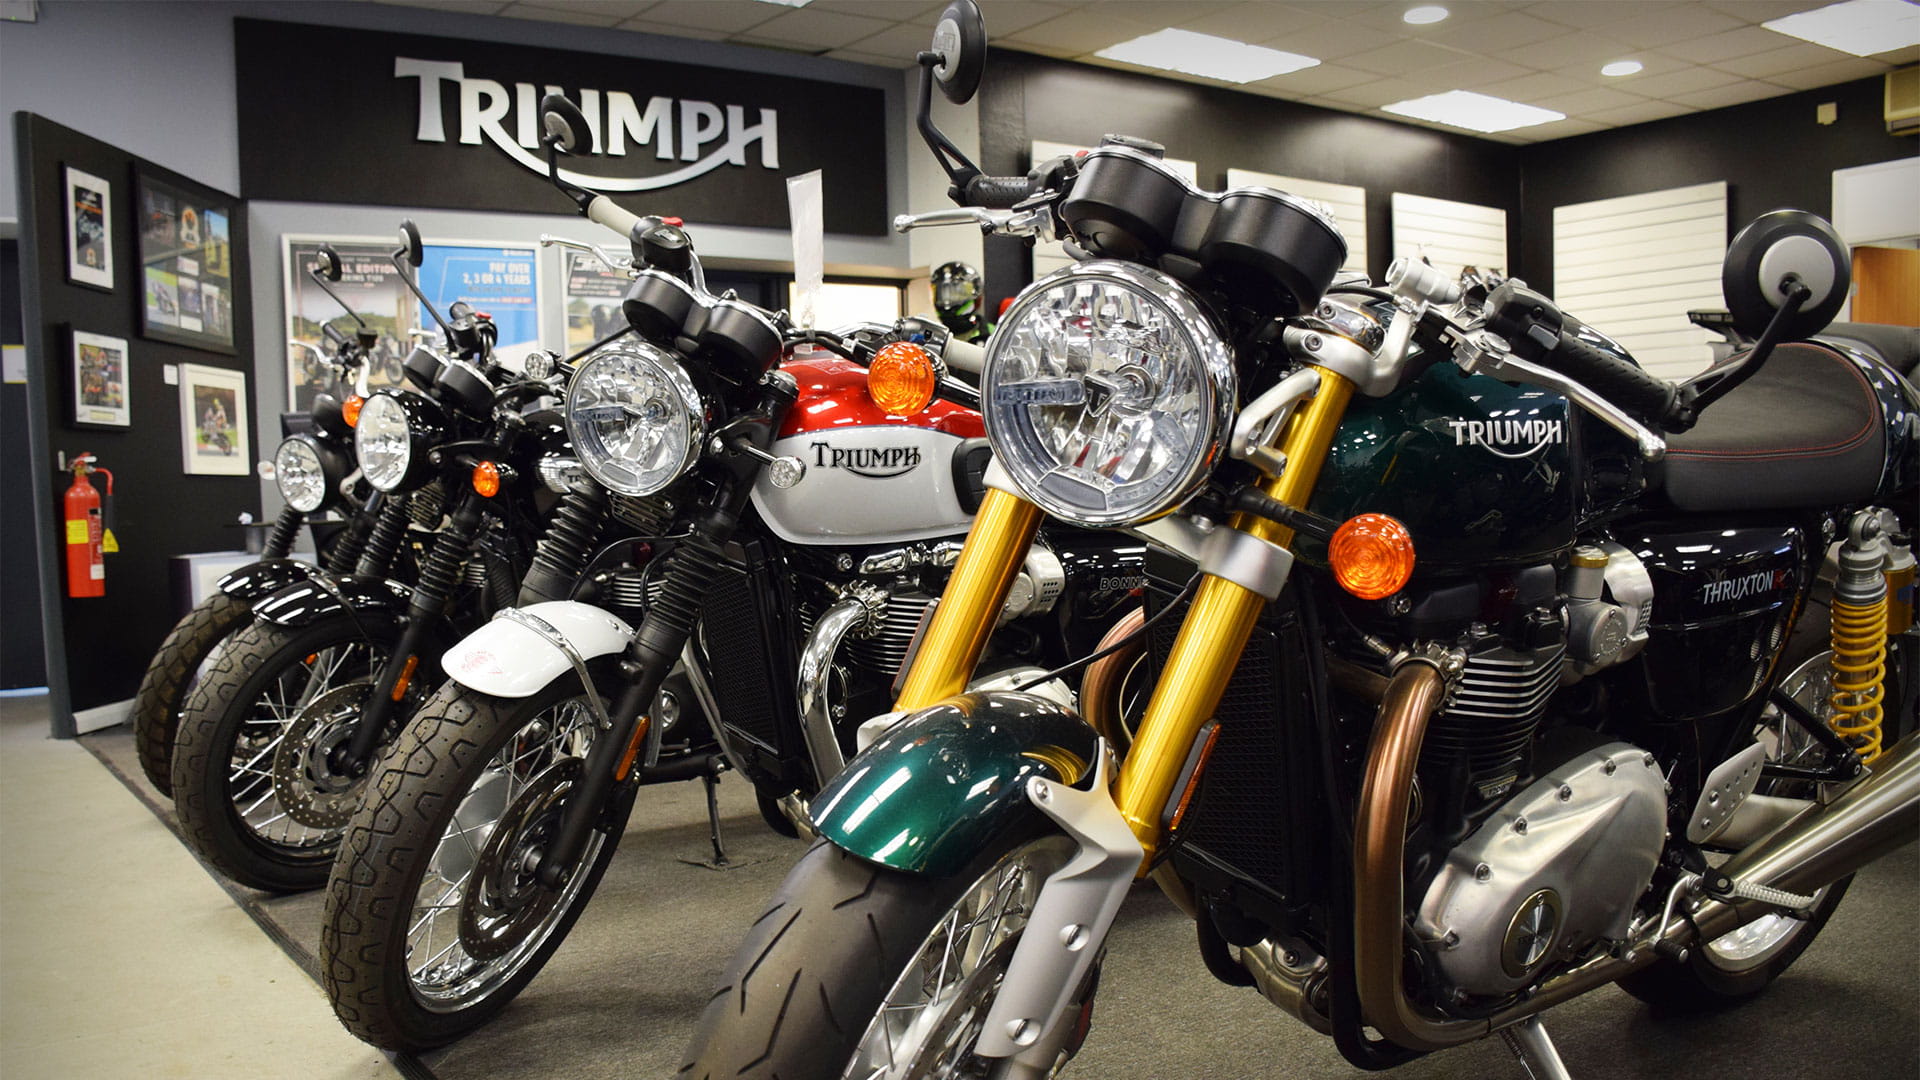 Triumph motorcycles dealership in Maidstone - Laguna Motorcycles